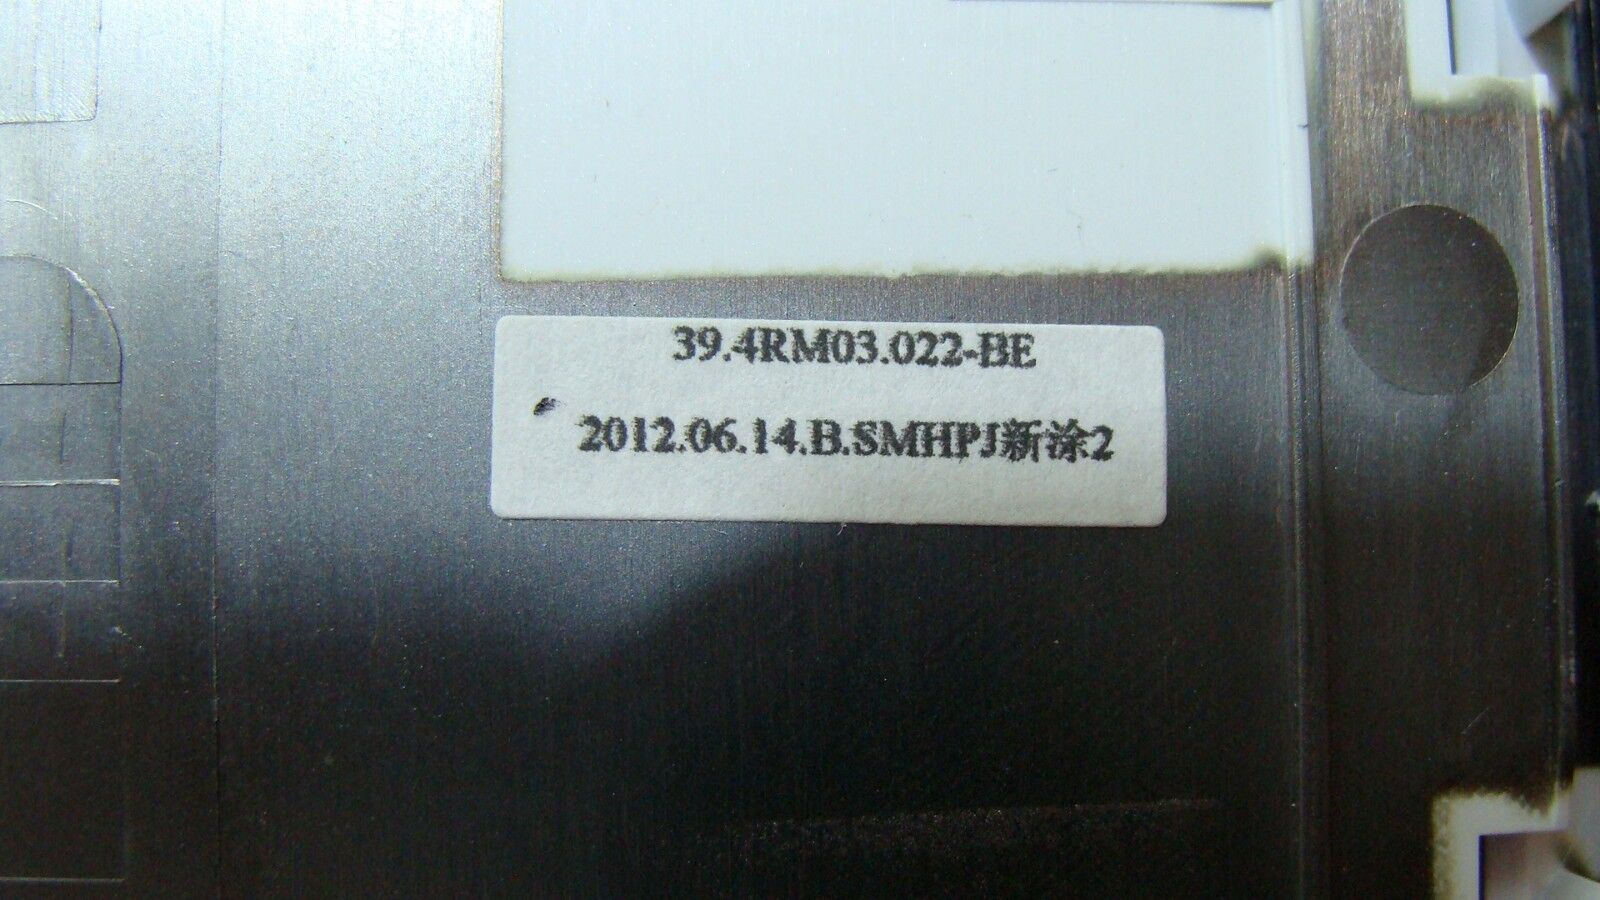 Sony Vaio SVE151B11N 15.6